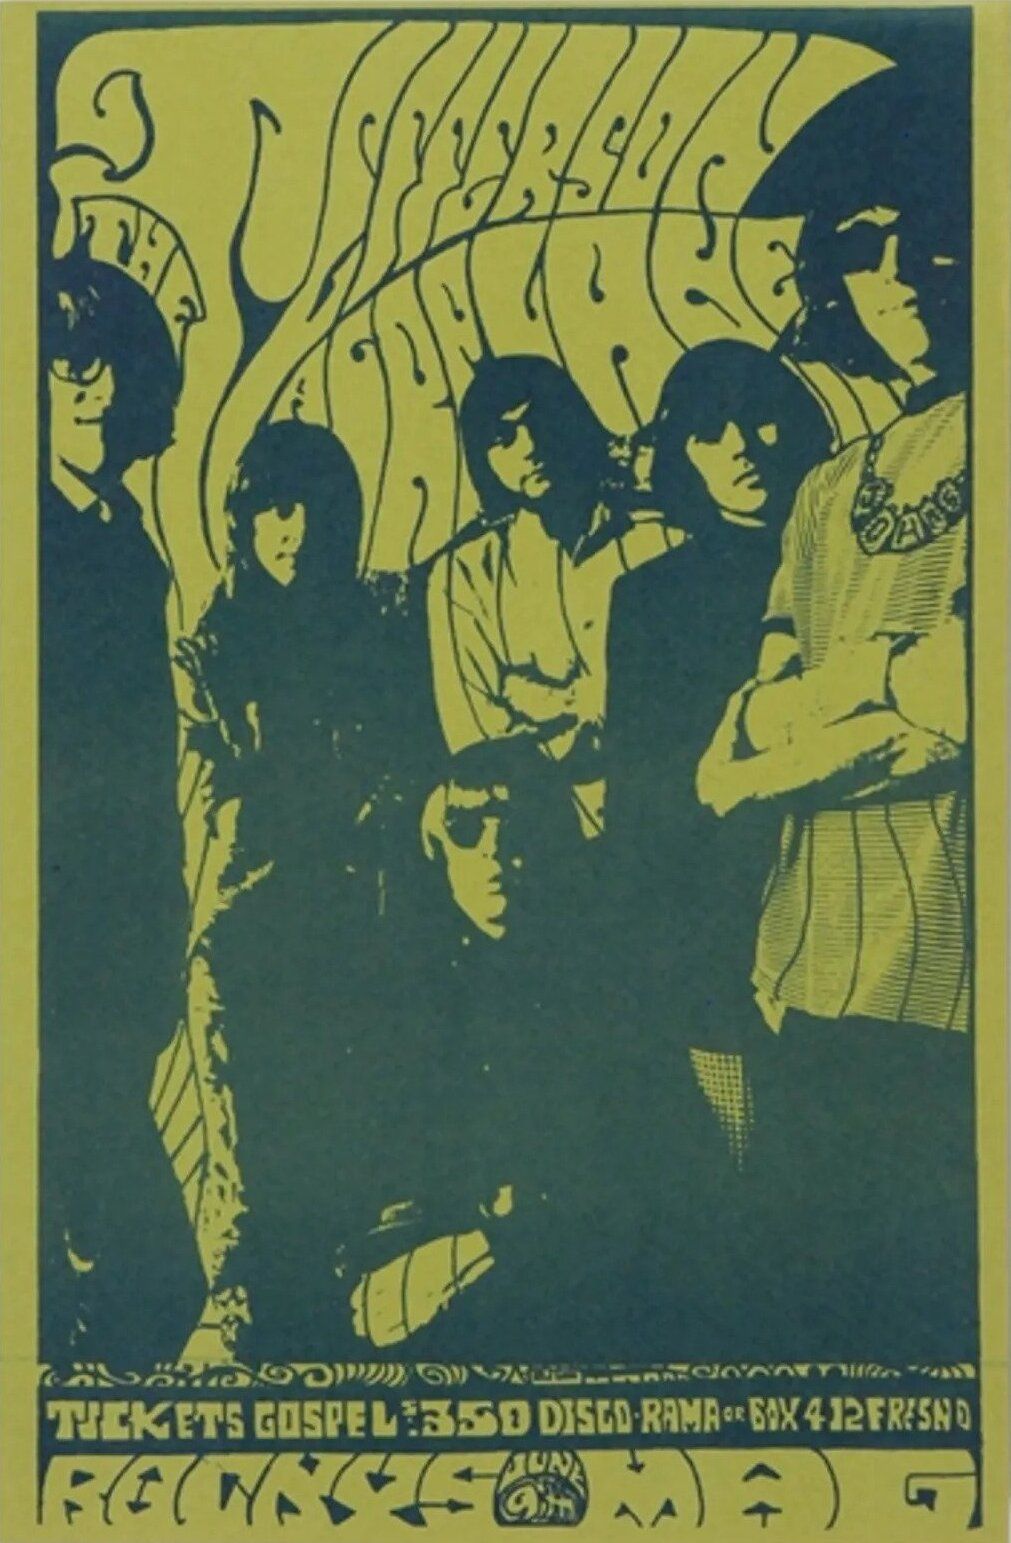 Jefferson Airplane Marigold Ballroom 1967 Concert Poster